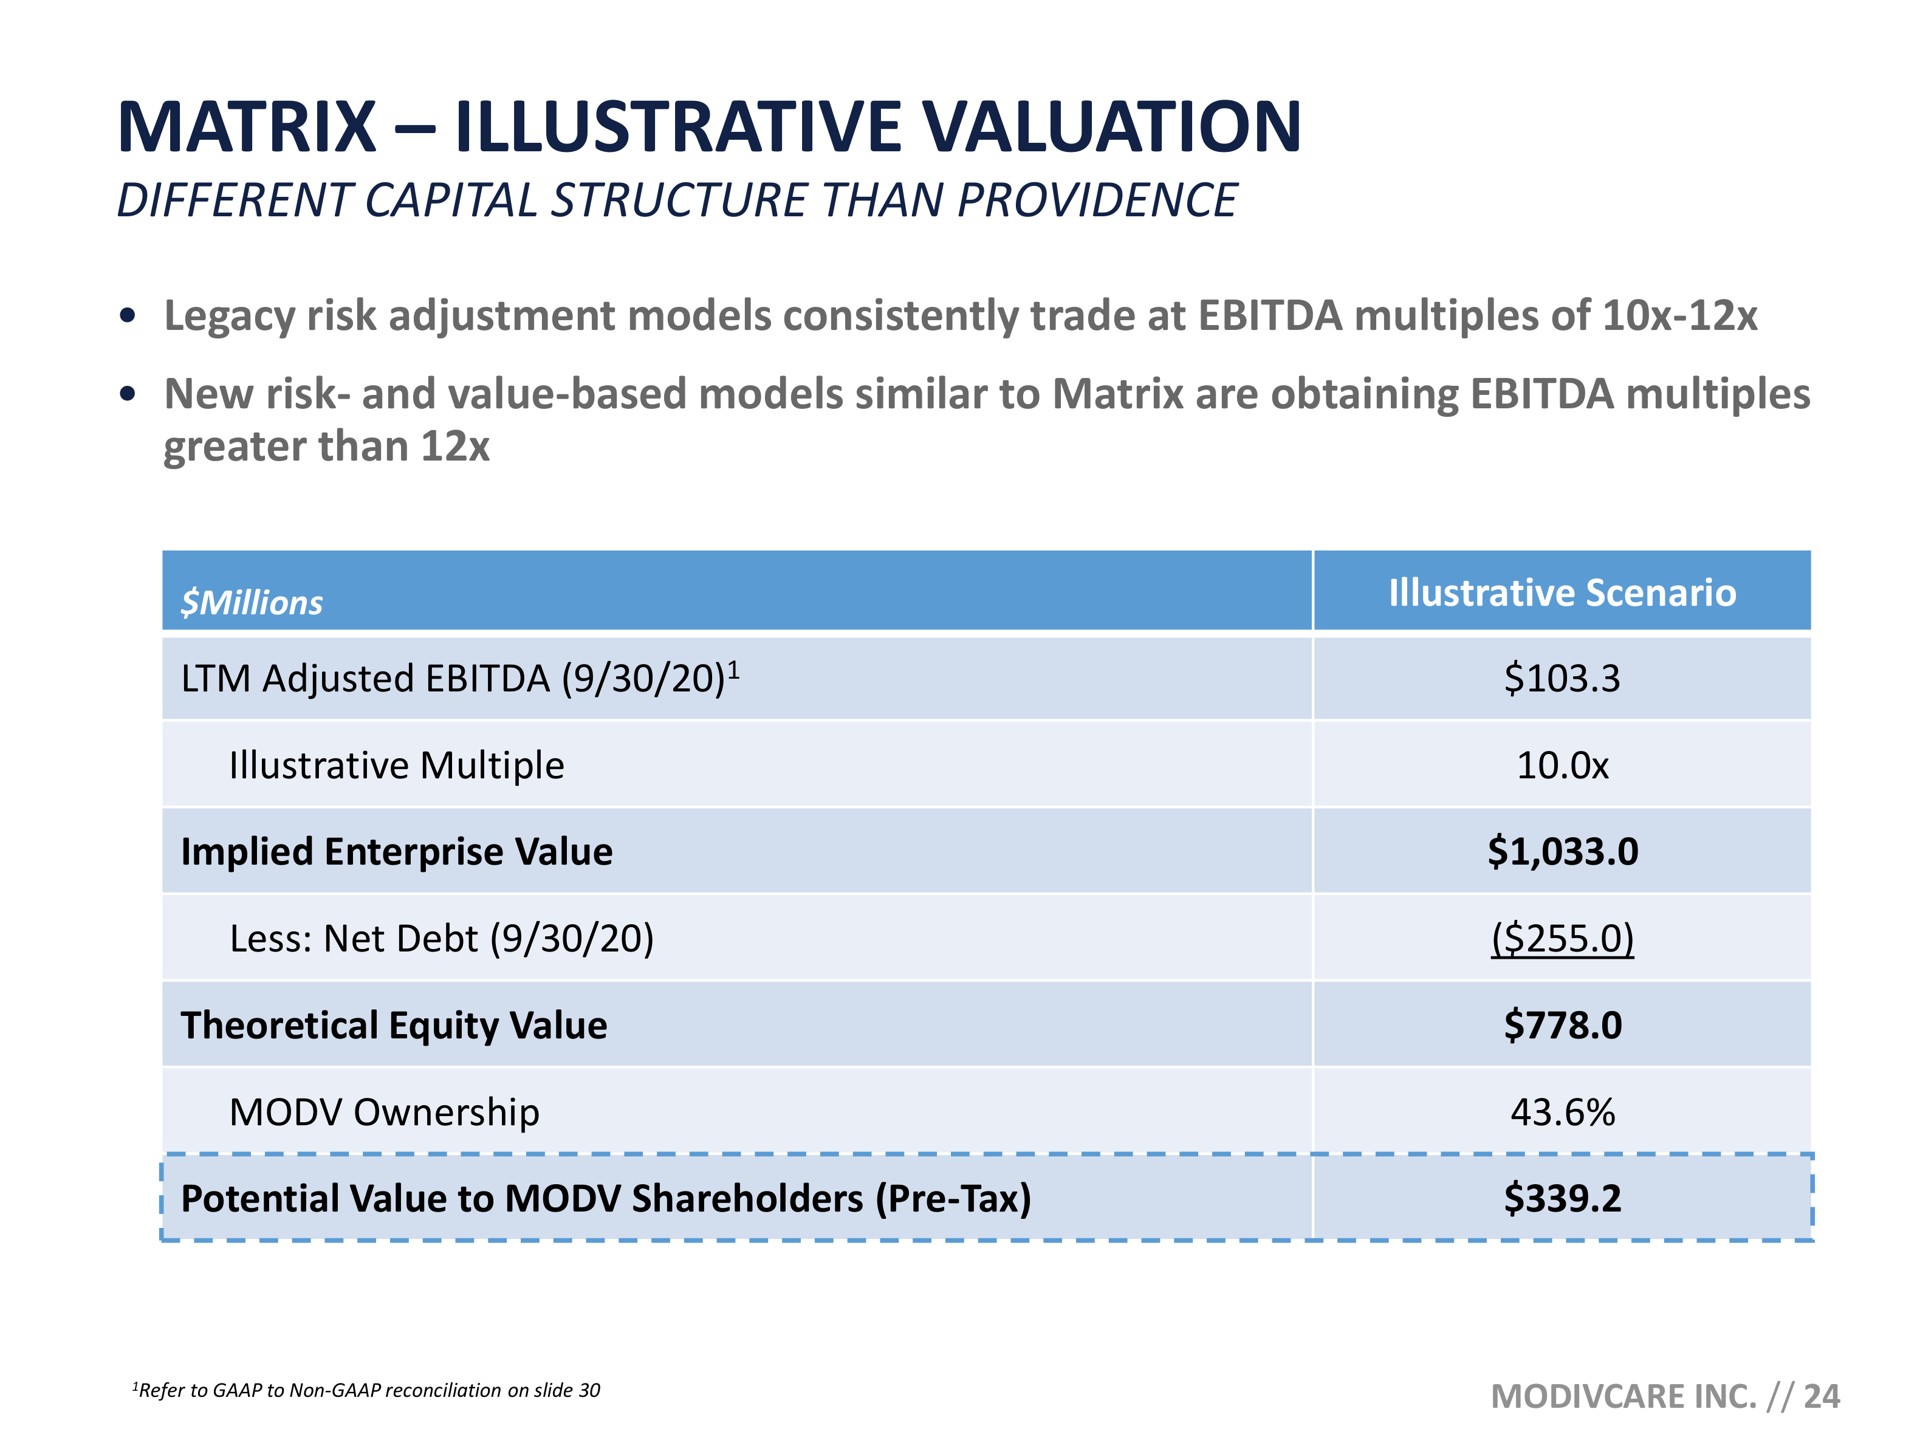 matrix illustrative valuation potential value to shareholders tax | ModivCare